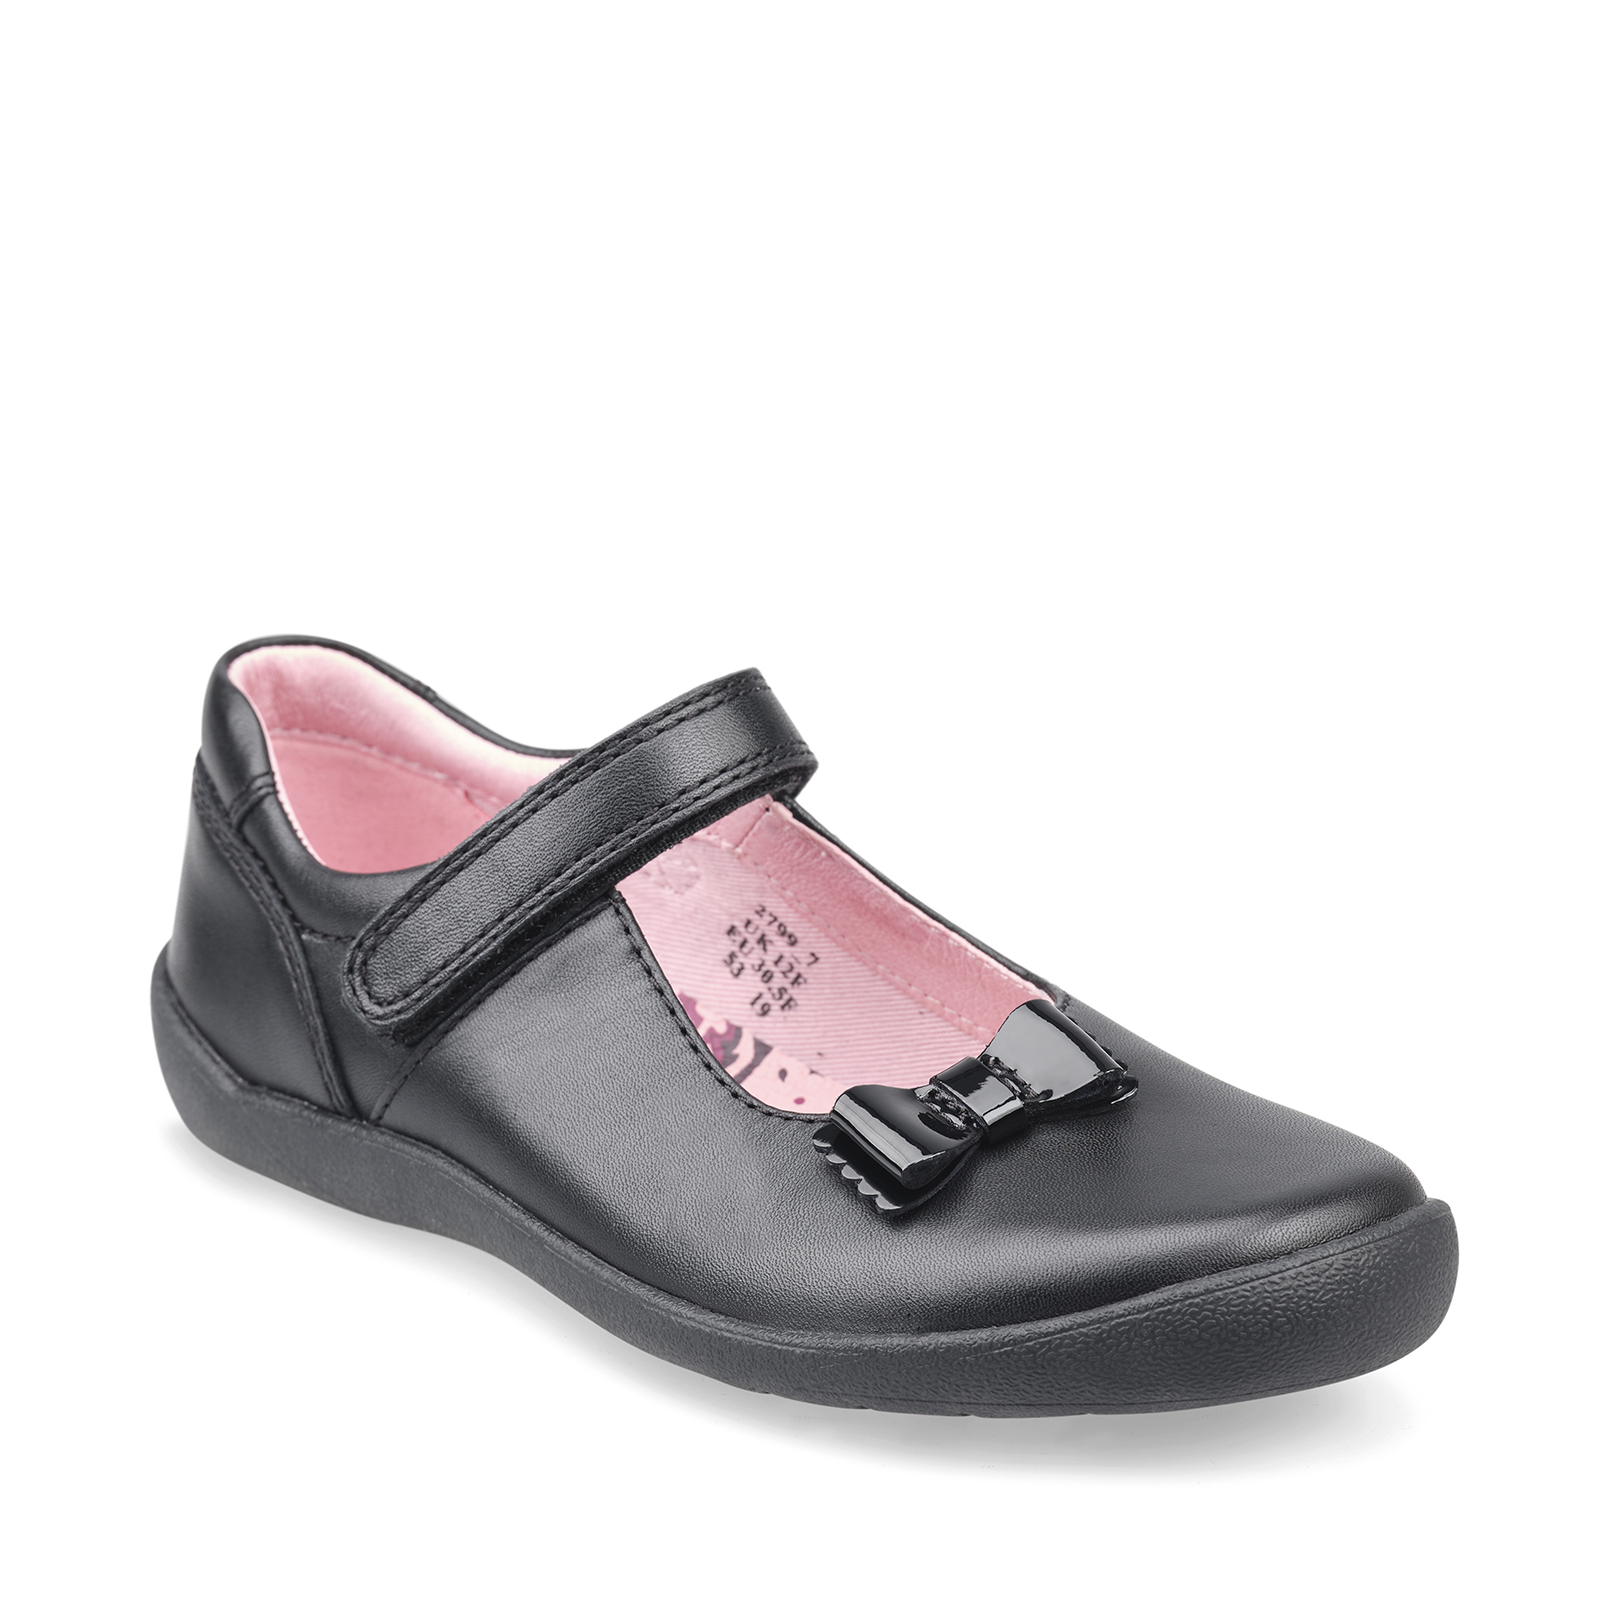 Start-Rite Giggle 2799-7 Black Leather Girls School Shoe